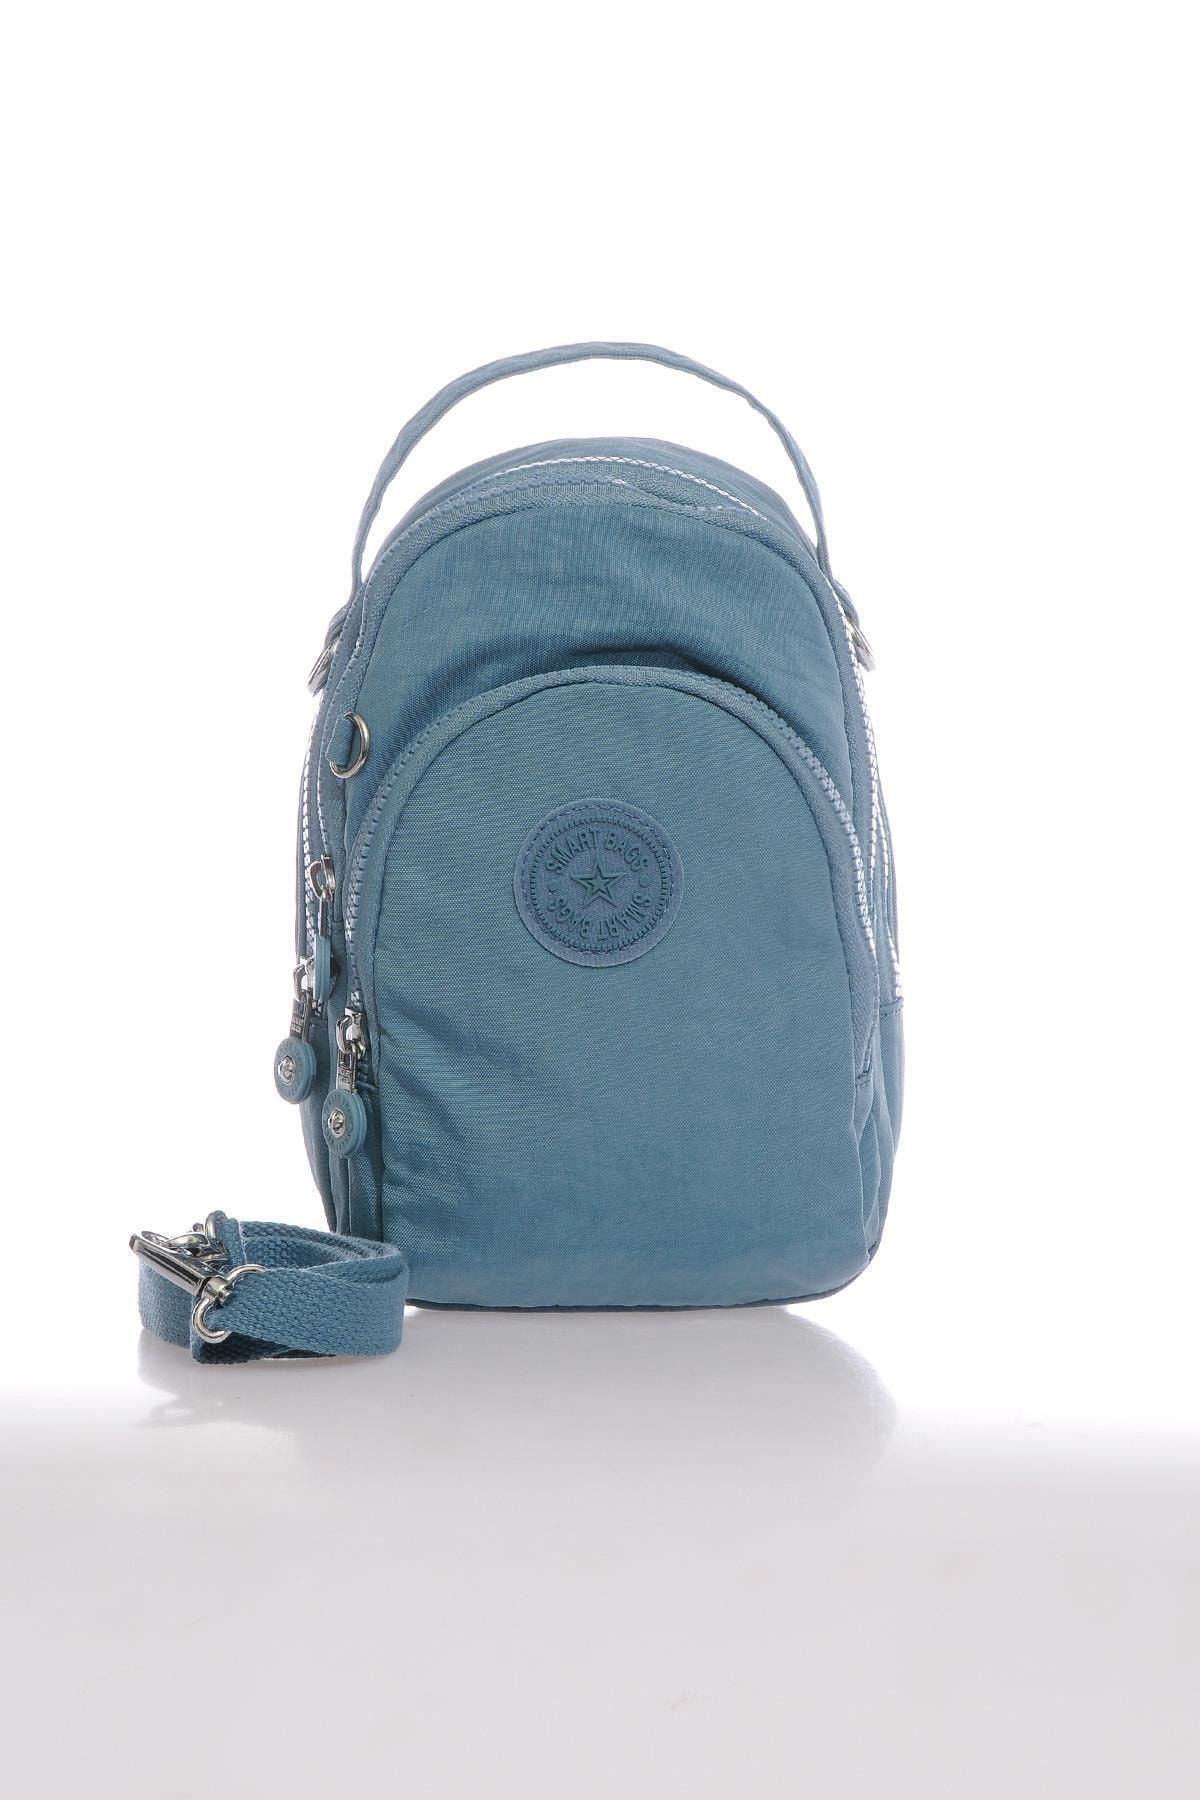 Smart Bags Smb3031-0050 Buz Mavisi Kadın Çapraz Çanta